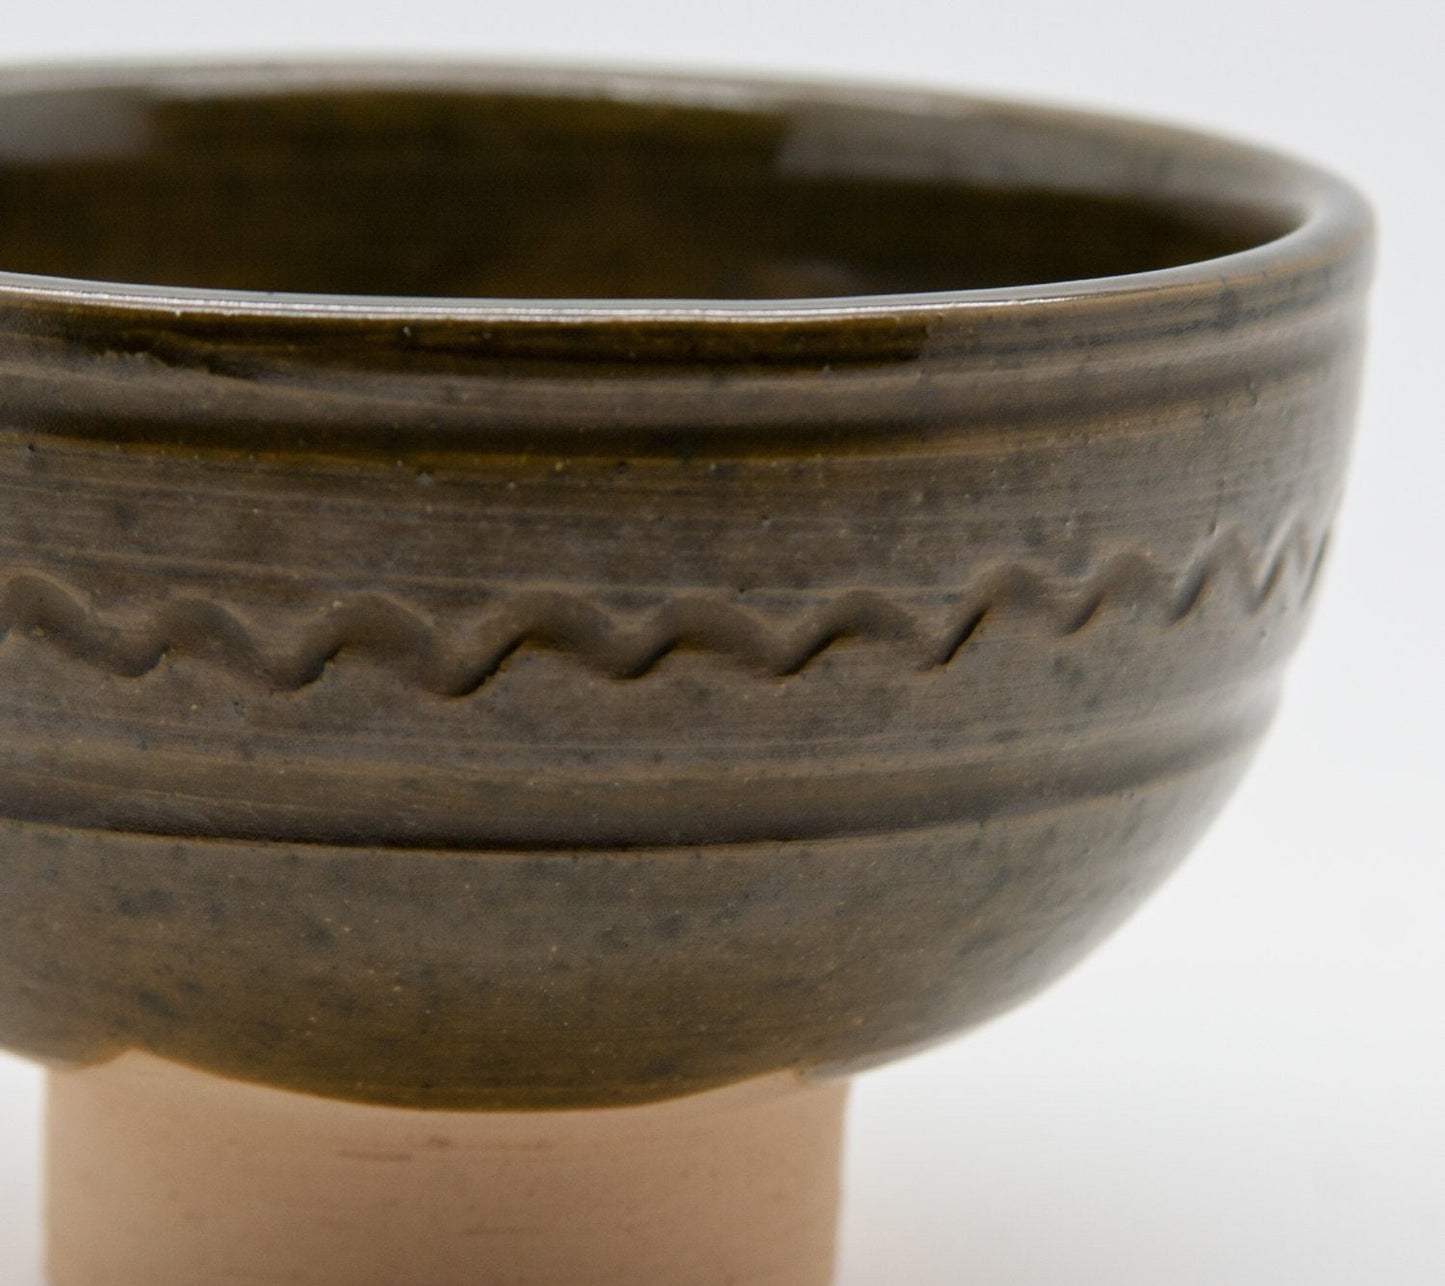 PRÆSTØ Green Glazed Ceramic Footed Bowl Mollaris.com 